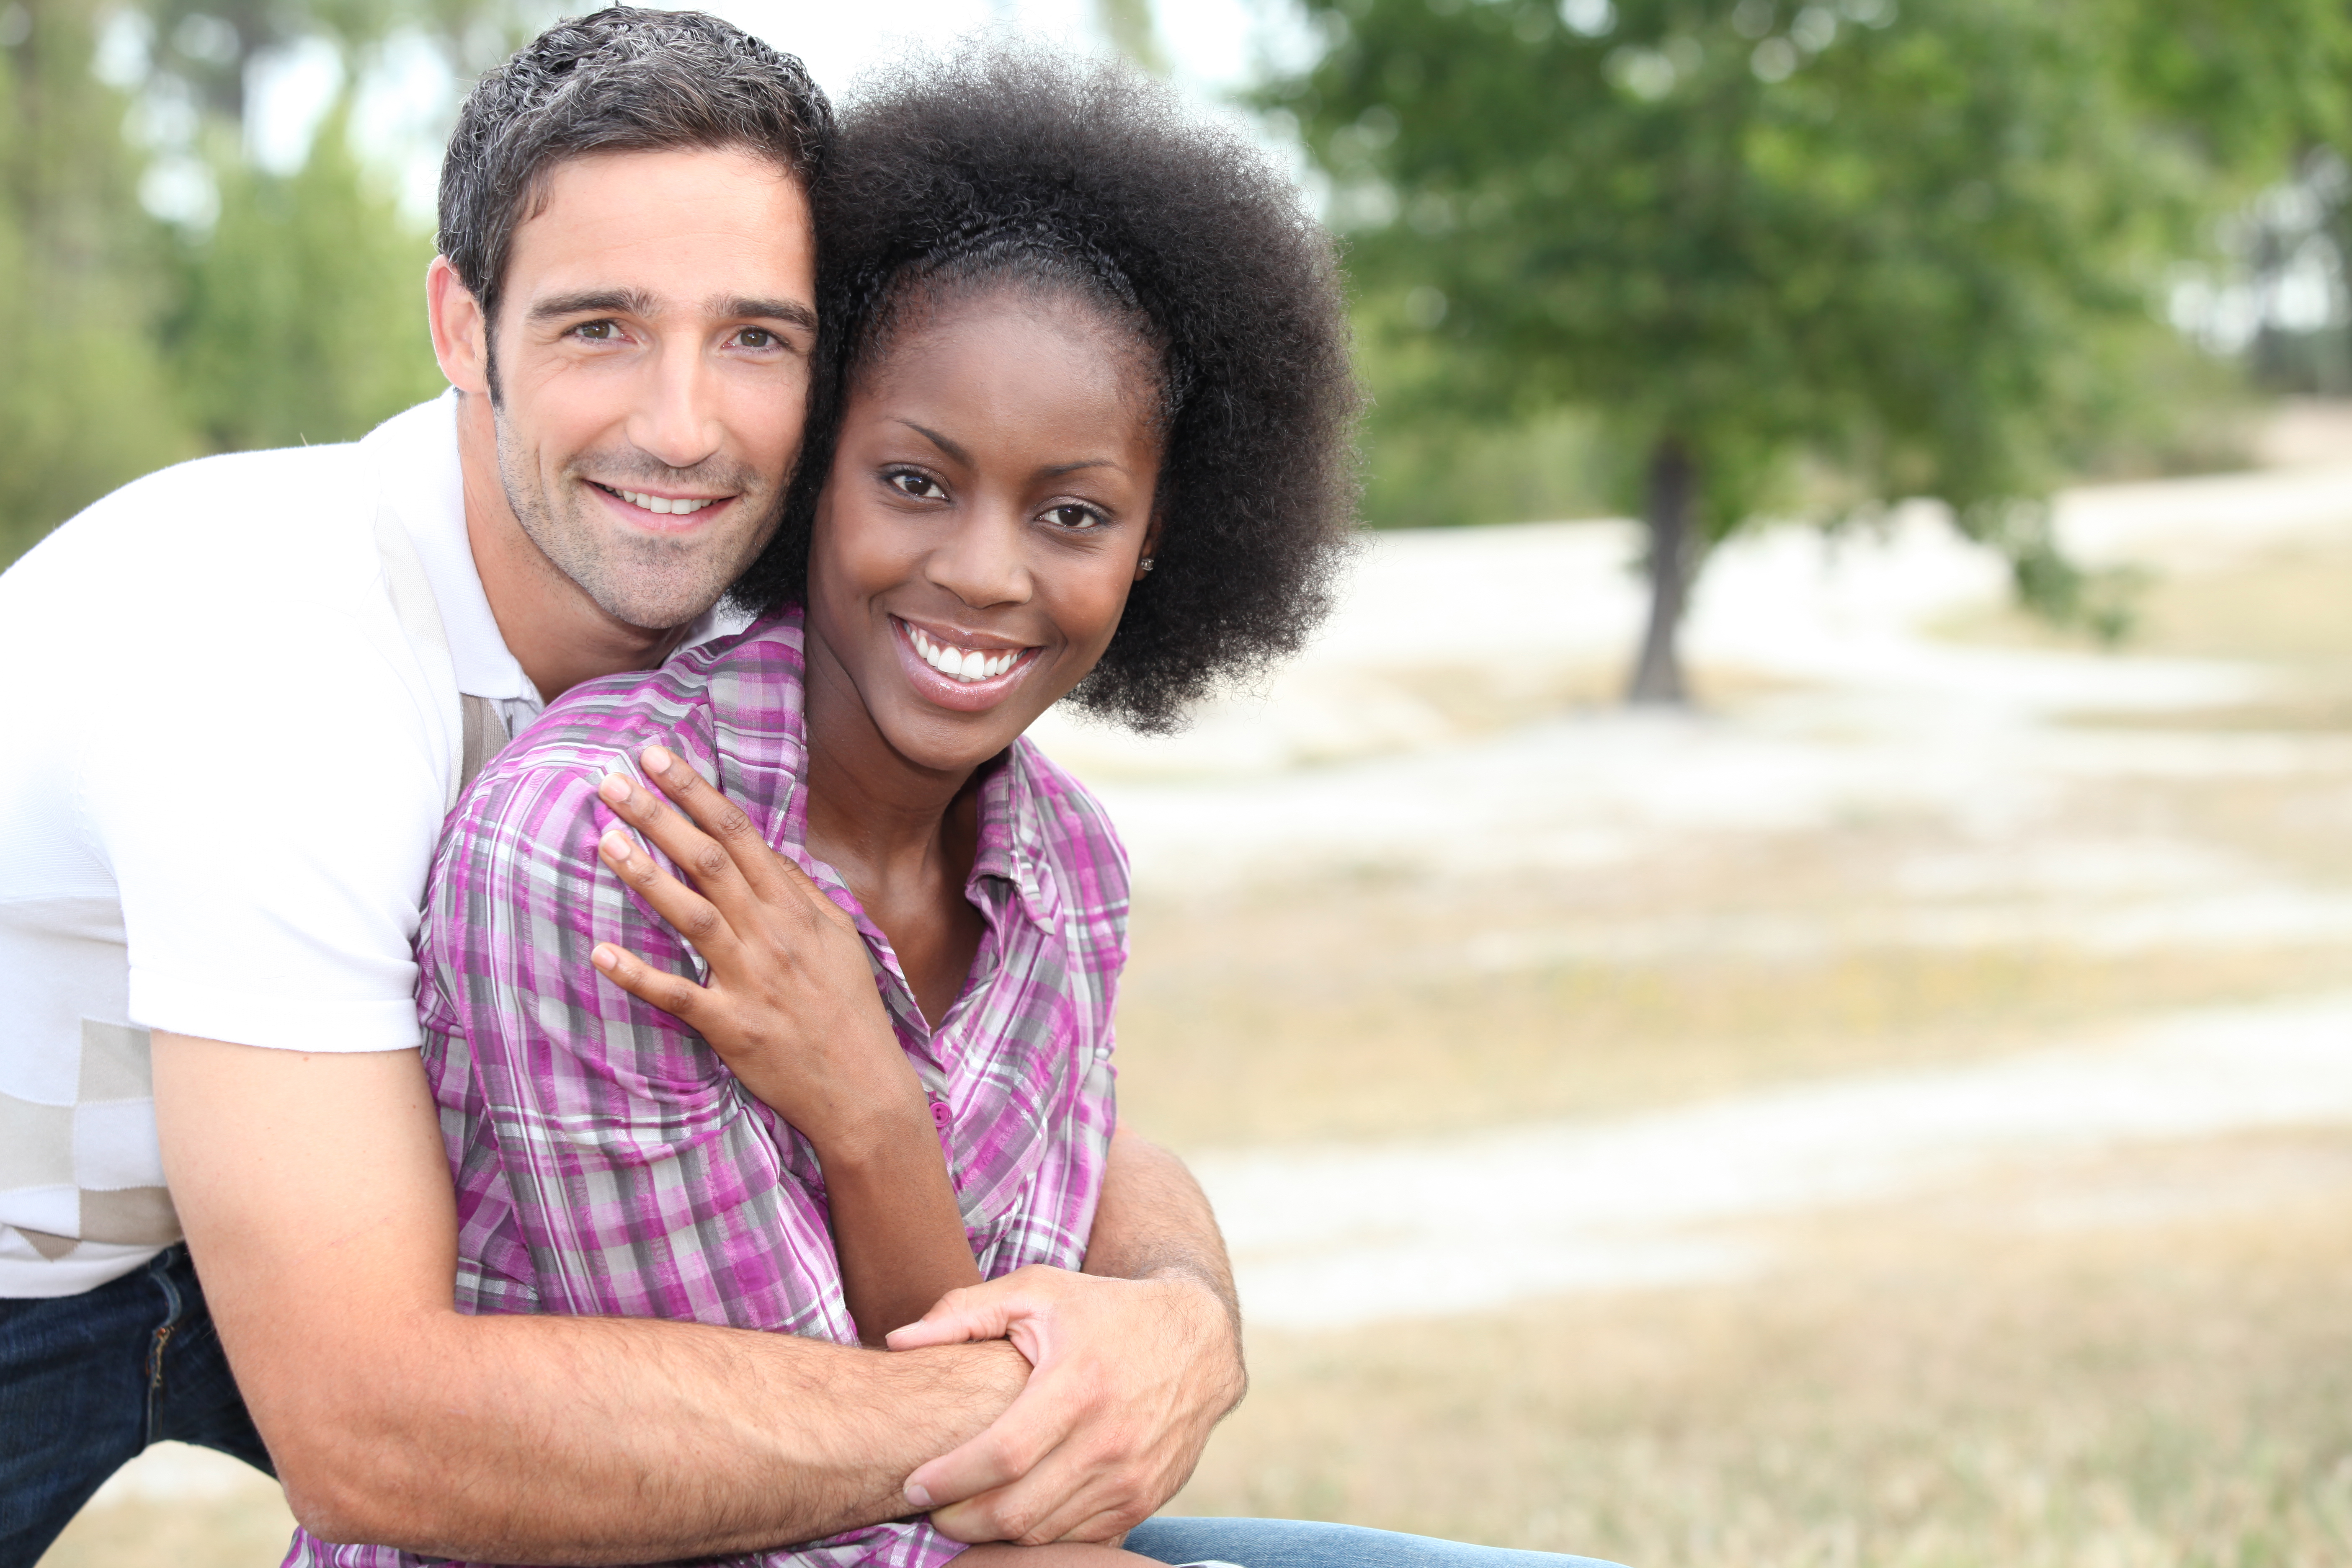 A mixed-race couple outdoors | Source: Shutterstock